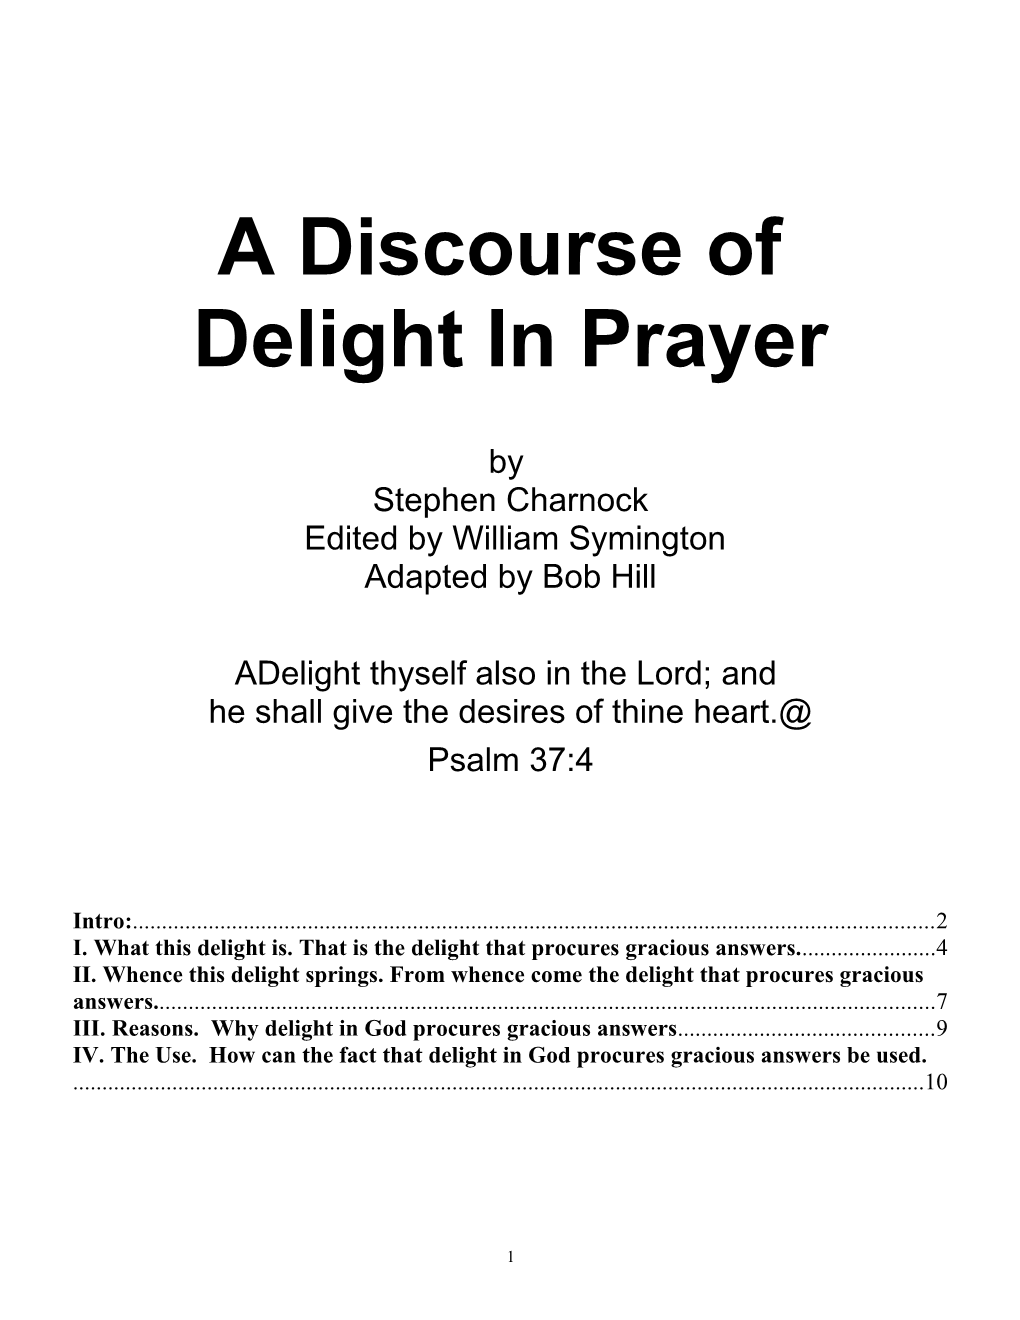 A Discourse of Delight in Prayer